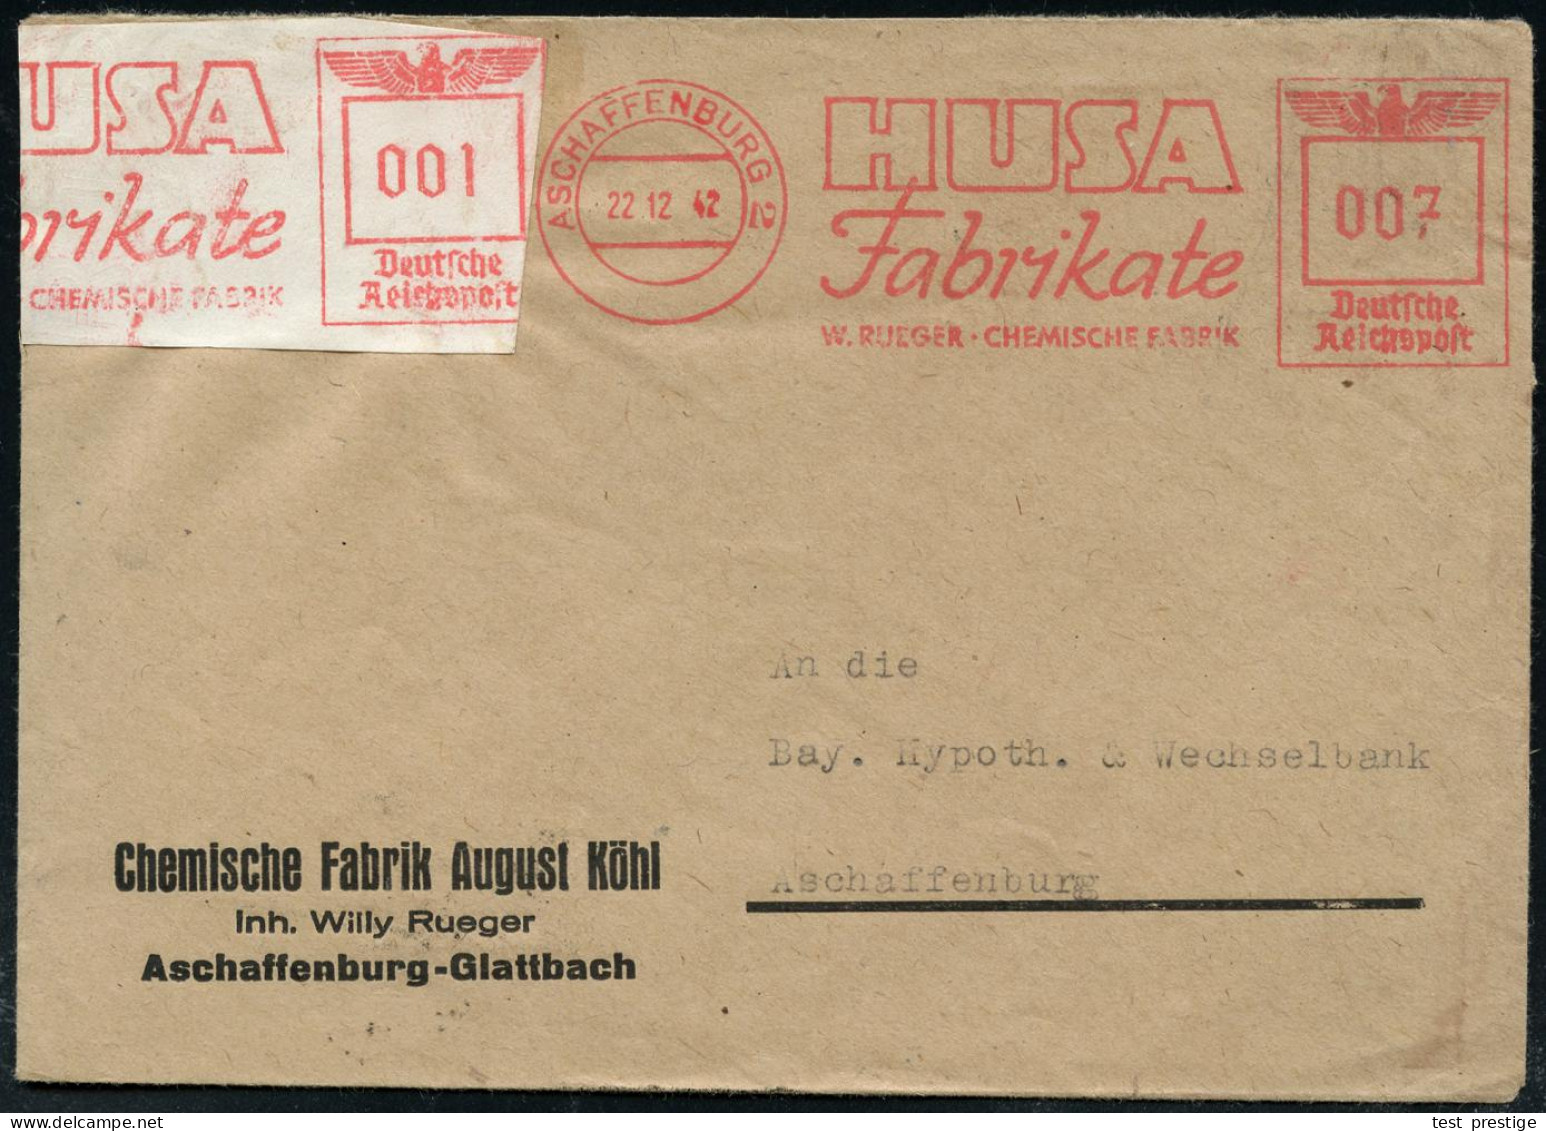 ASCHAFFENBURG 2/ HUSA/ Fabrikate/ W.RUEGER-CHEMISCHE FABRIK 1942 (22.12.) AFS Francotyp 007 Pf. + Aufkleber Mit AFS 001  - Química